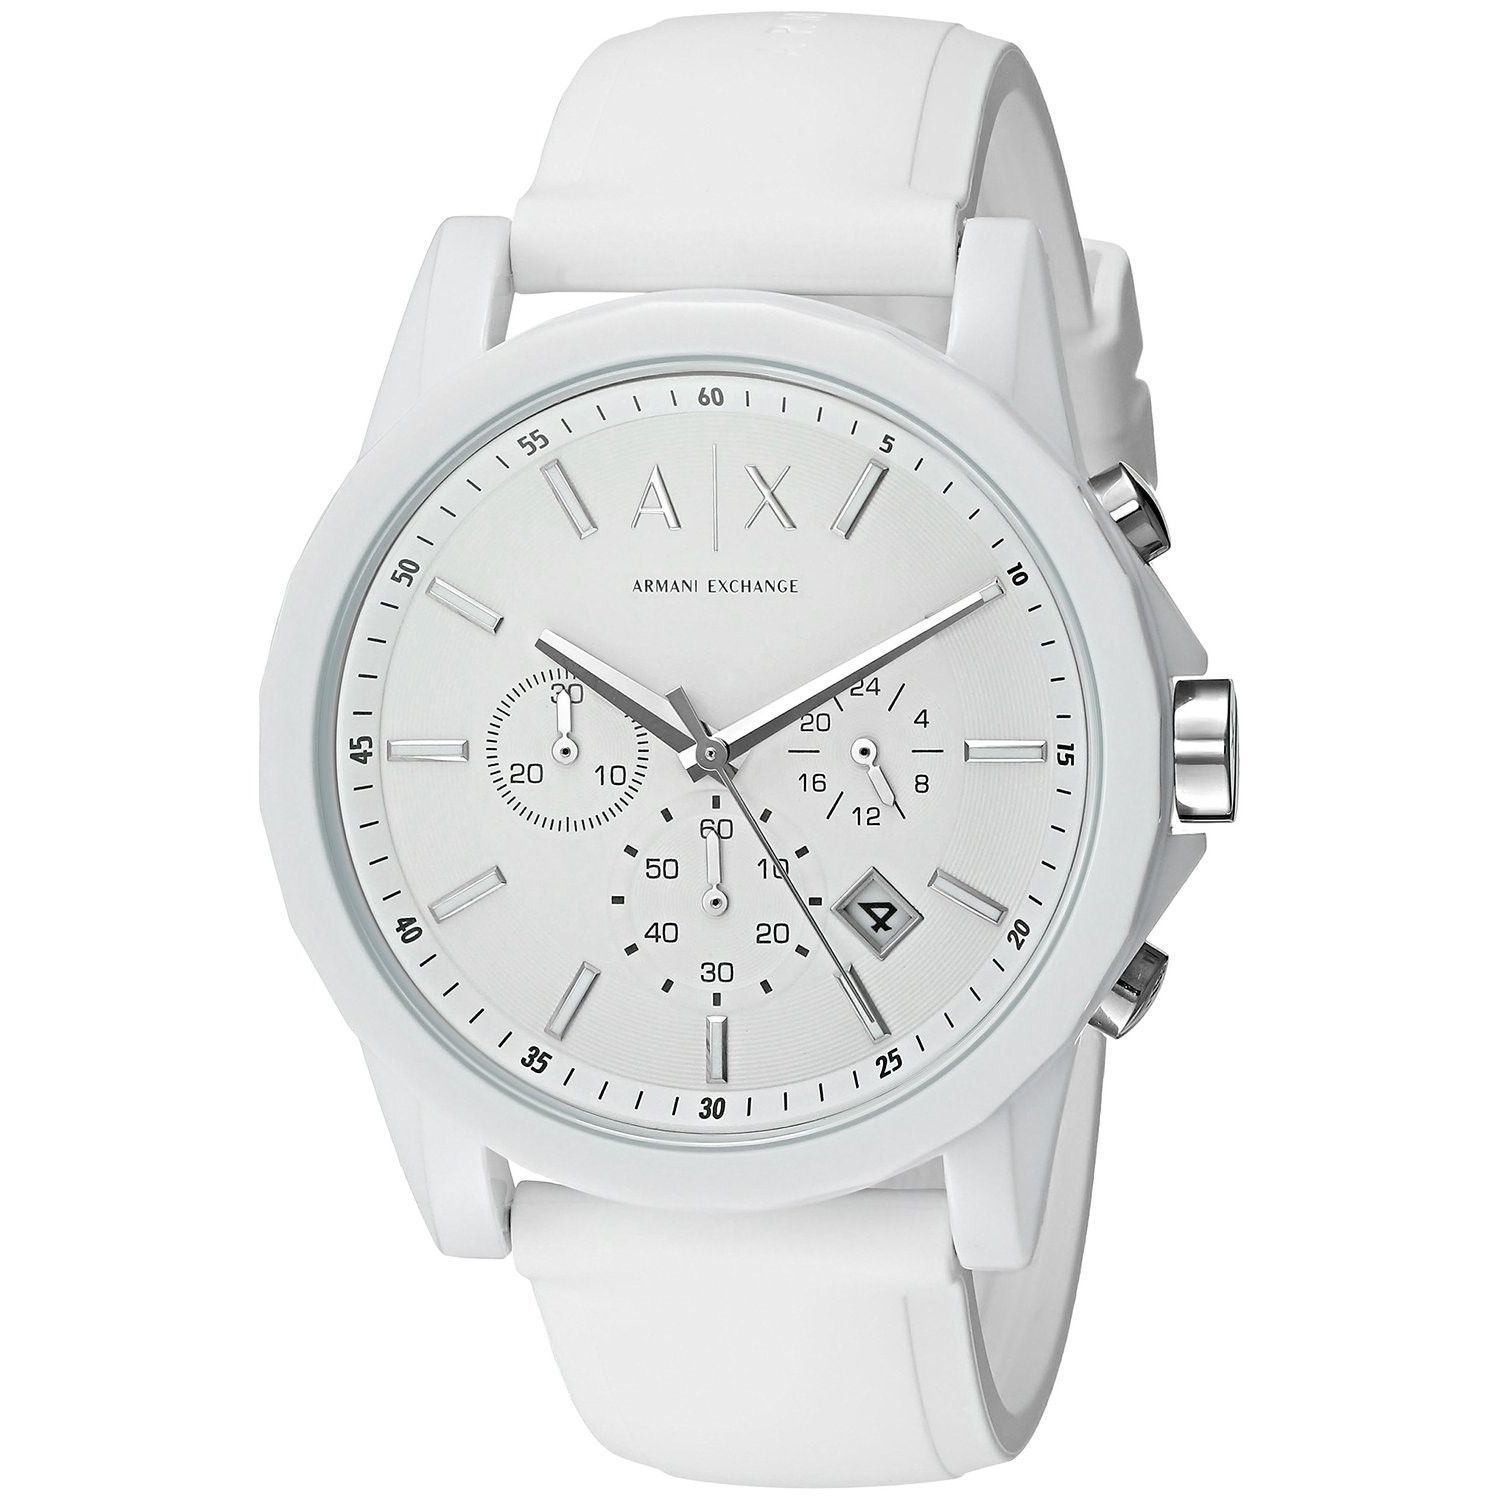 ax1325 watch